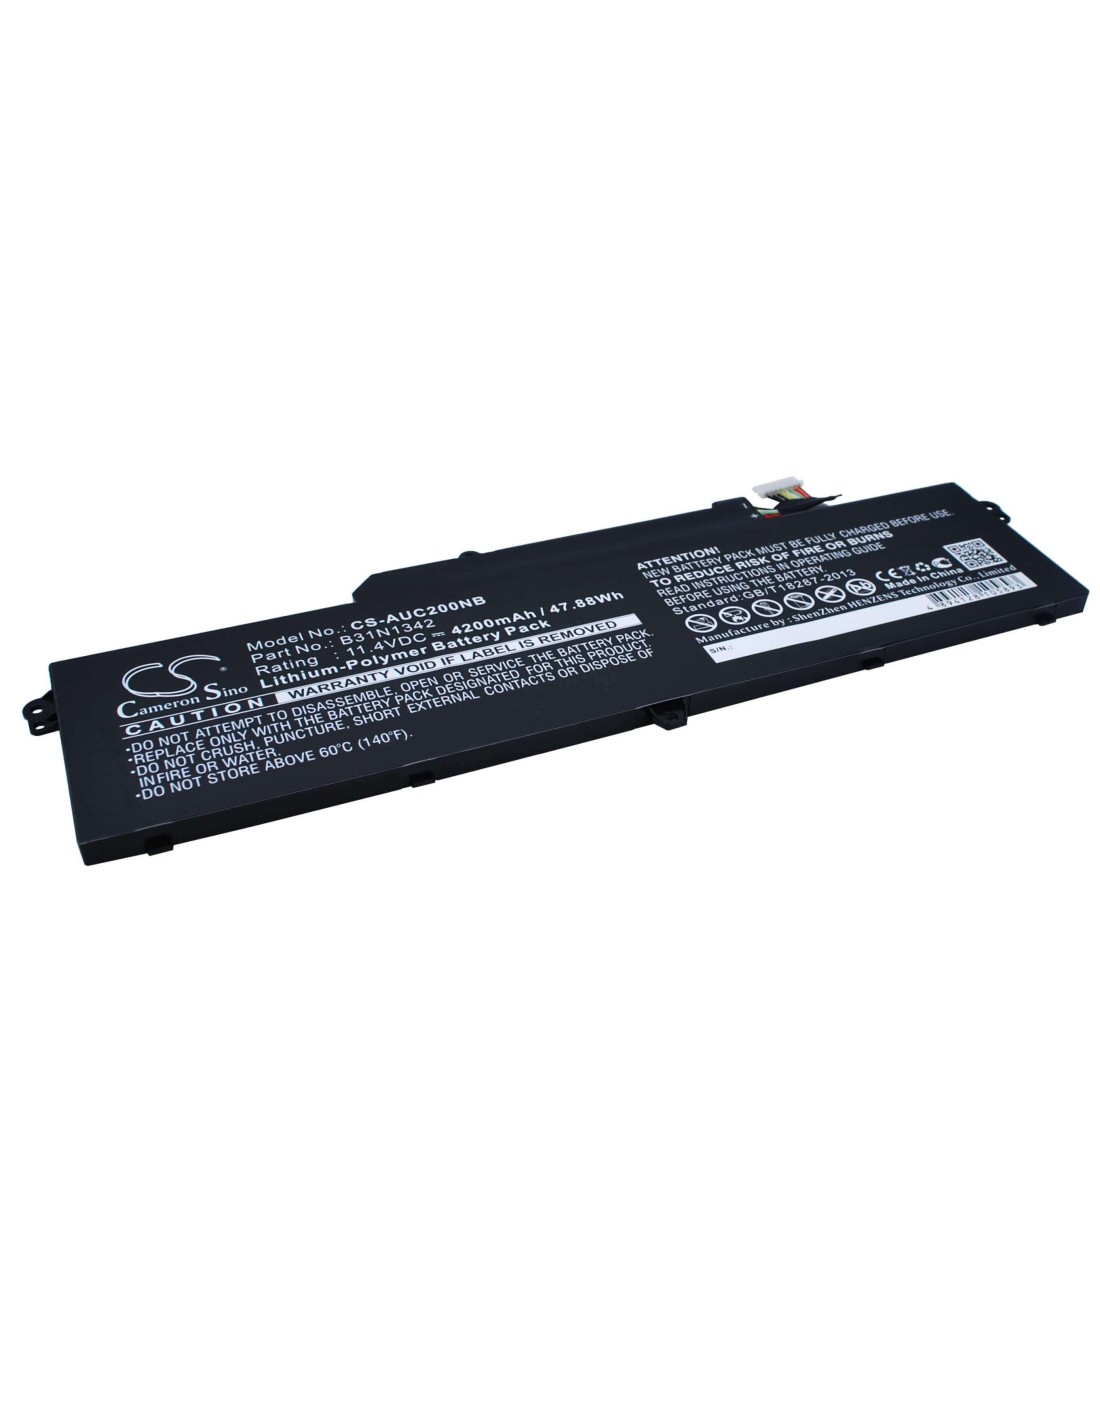 Black Battery for Asus Chromebook C200, Chromebook C200m, Chromebook C200ma 11.4V, 4200mAh - 47.88Wh